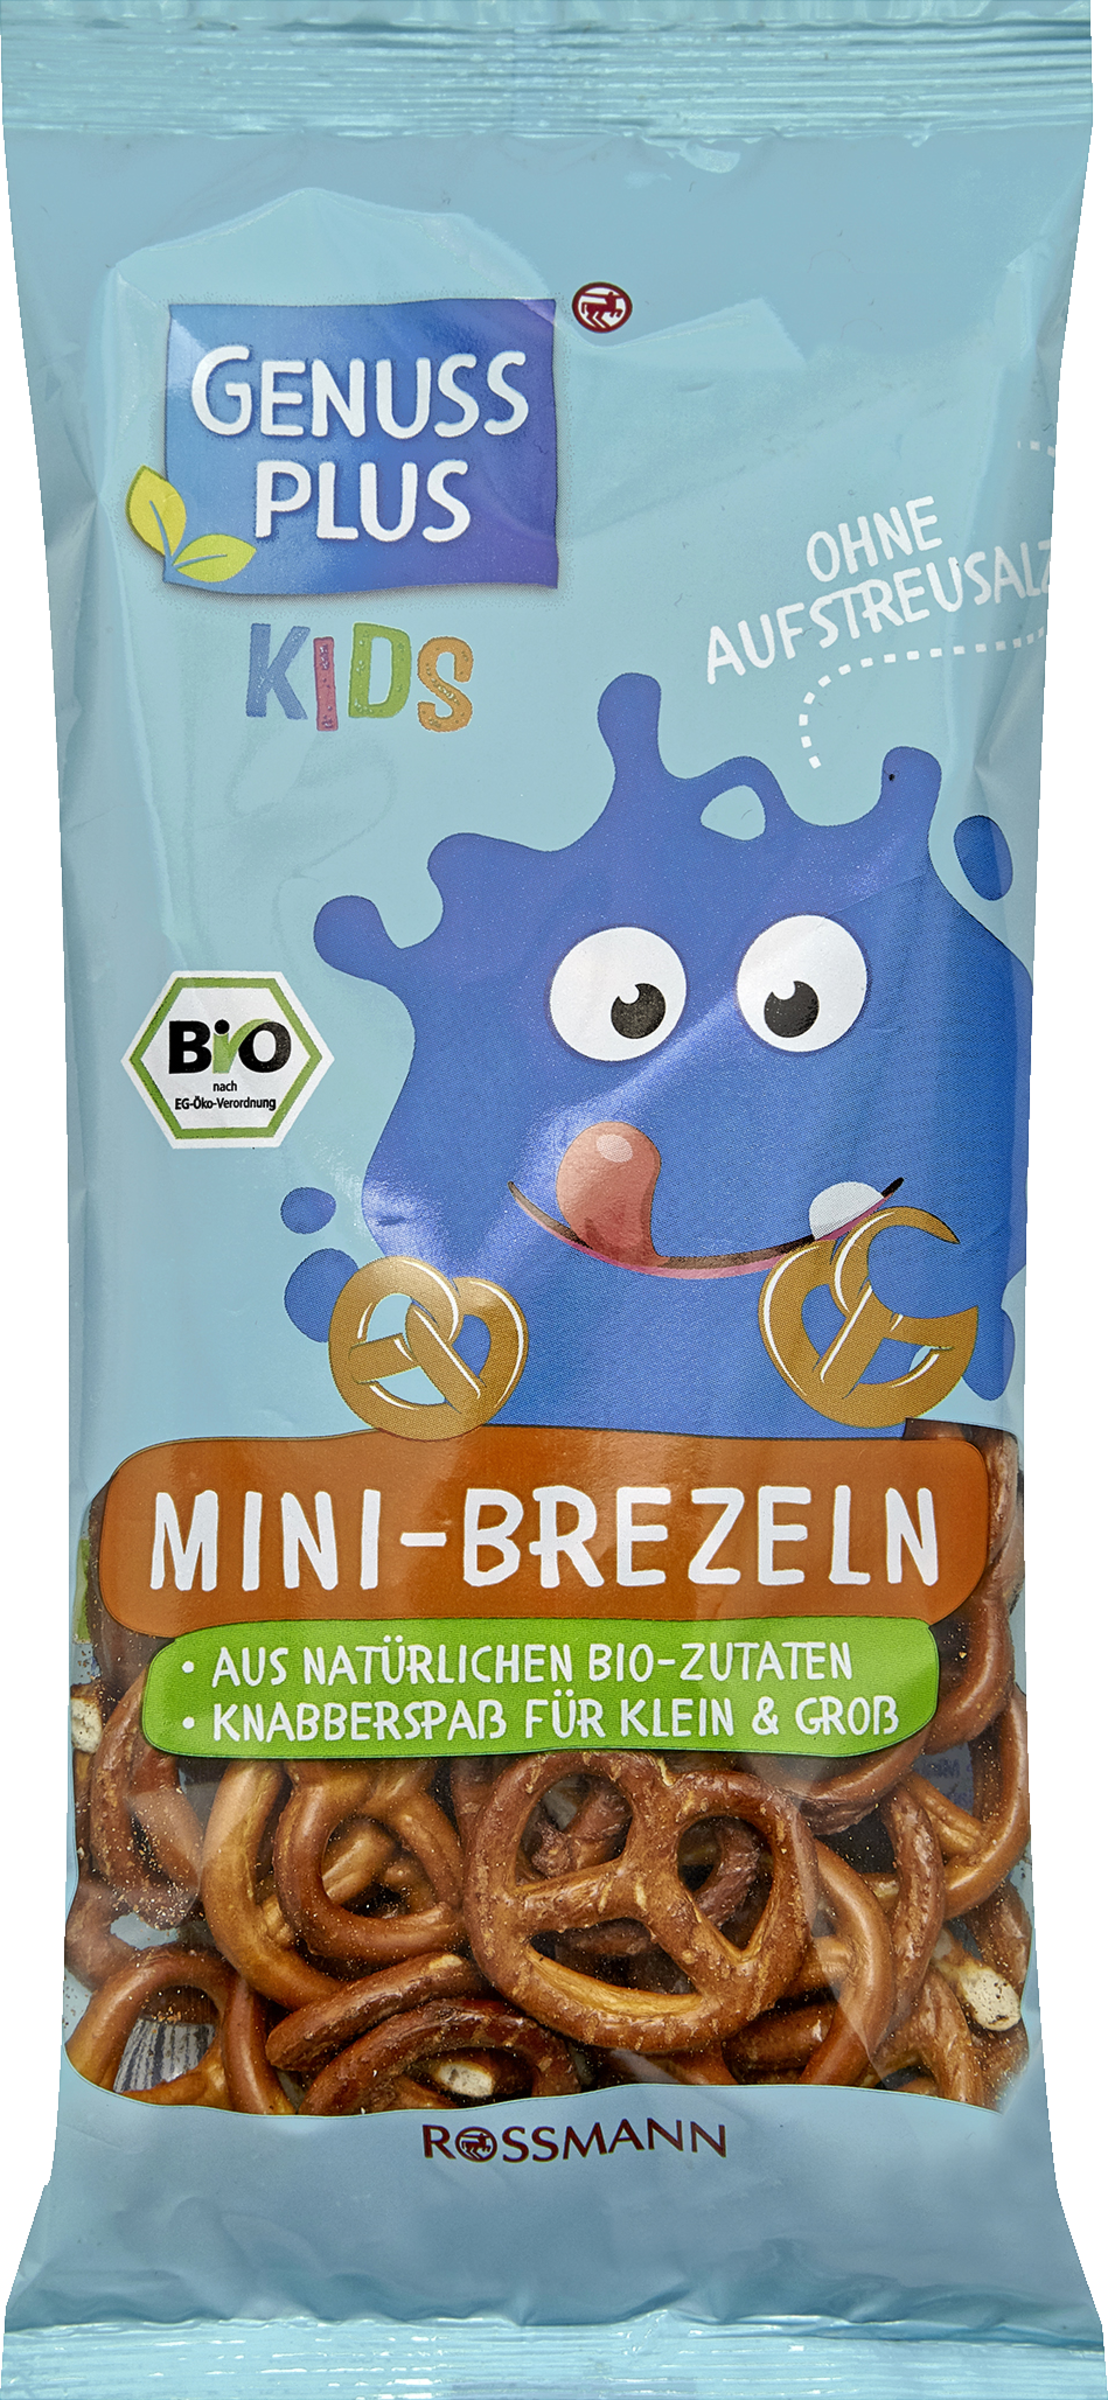 GENUSS PLUS KIDS Bio Mini-Brezeln online kaufen | rossmann.de